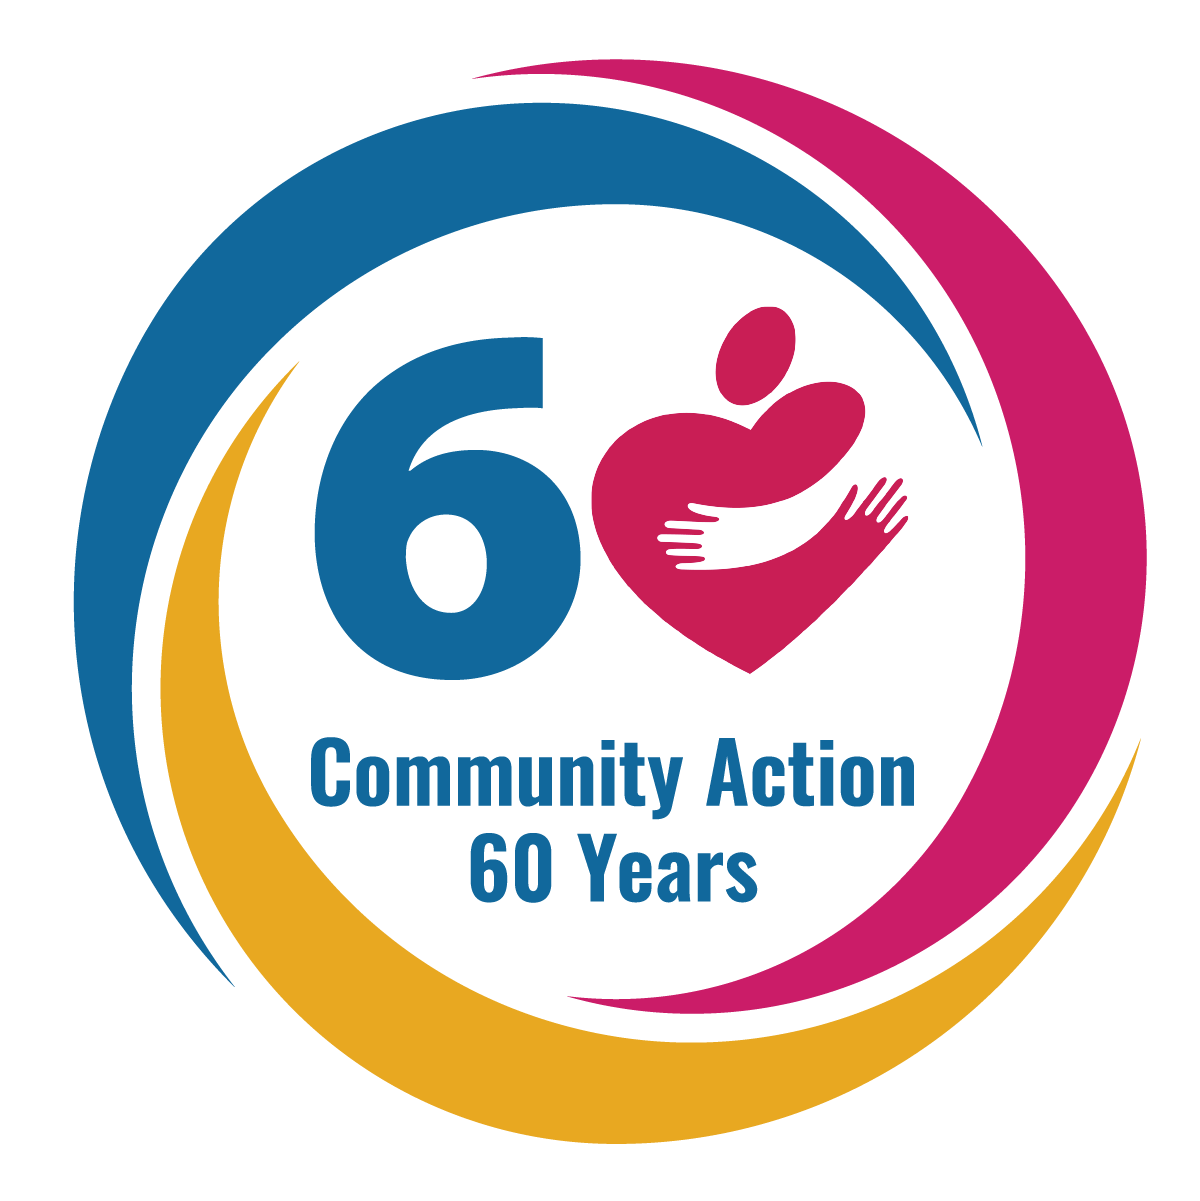 Celebrating 60 Years History of Community Action